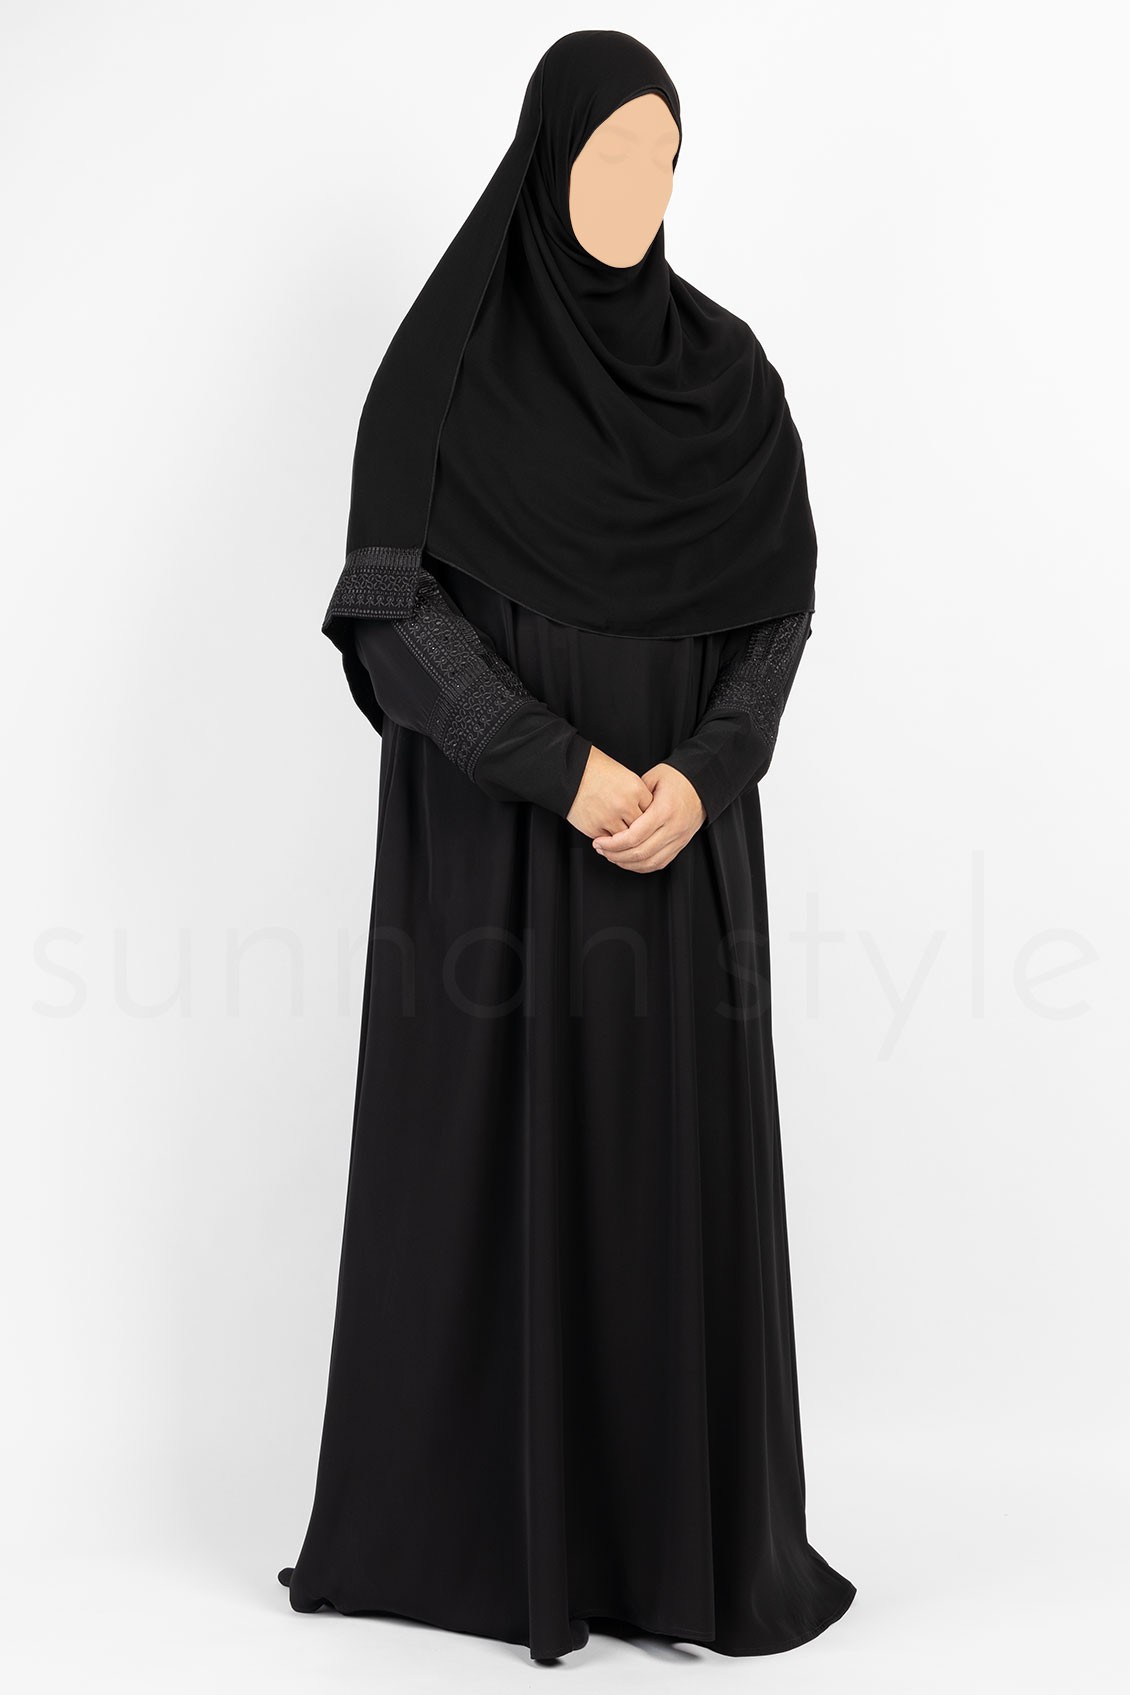 Sunnah Style Empress Shayla Black Embroidered Hijab Large